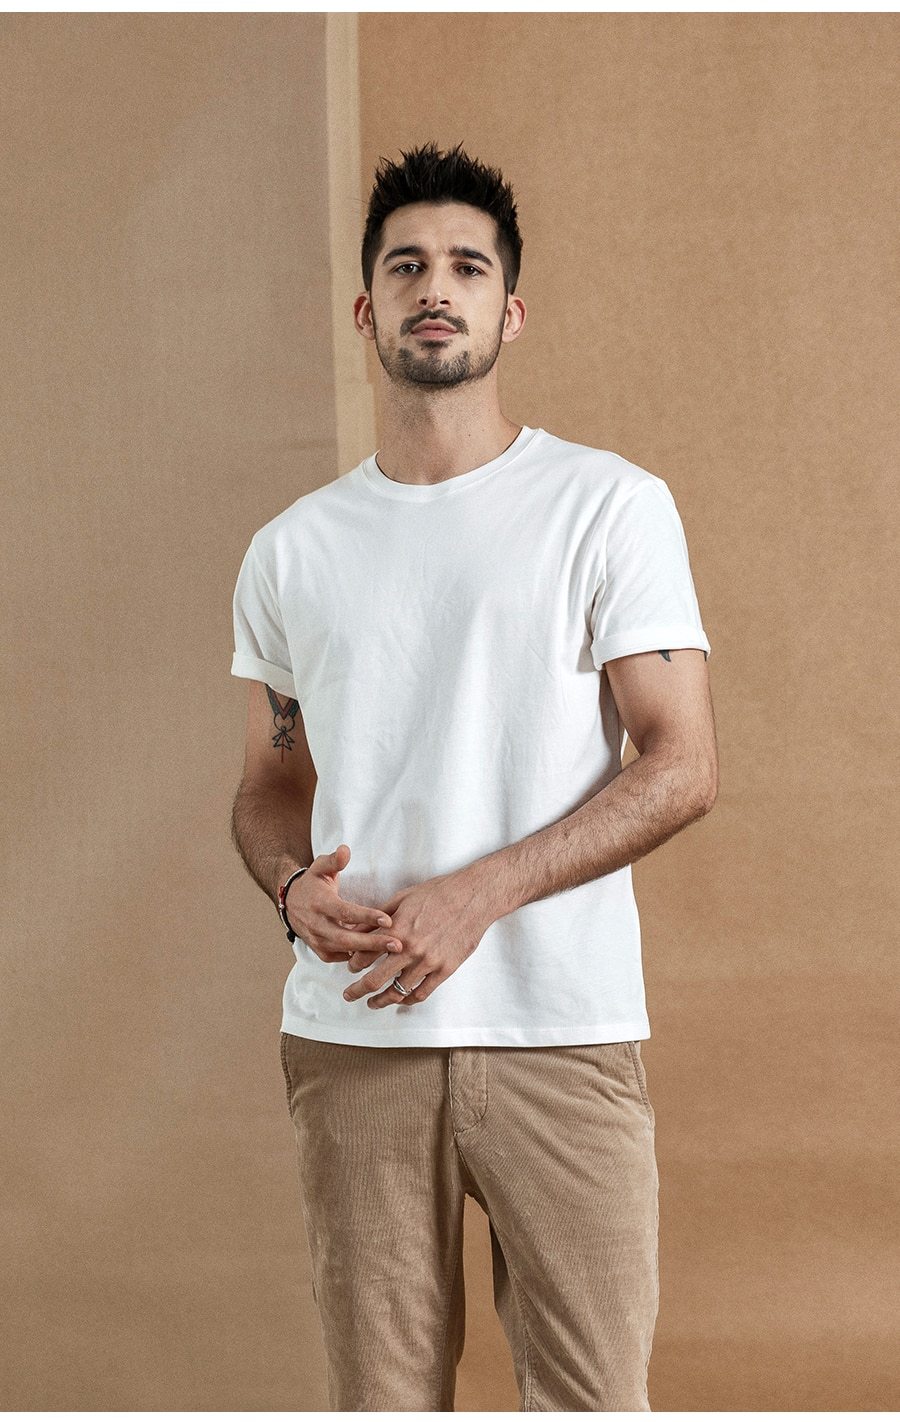 100% cotton white solid t shirt men causal o-neck basic.